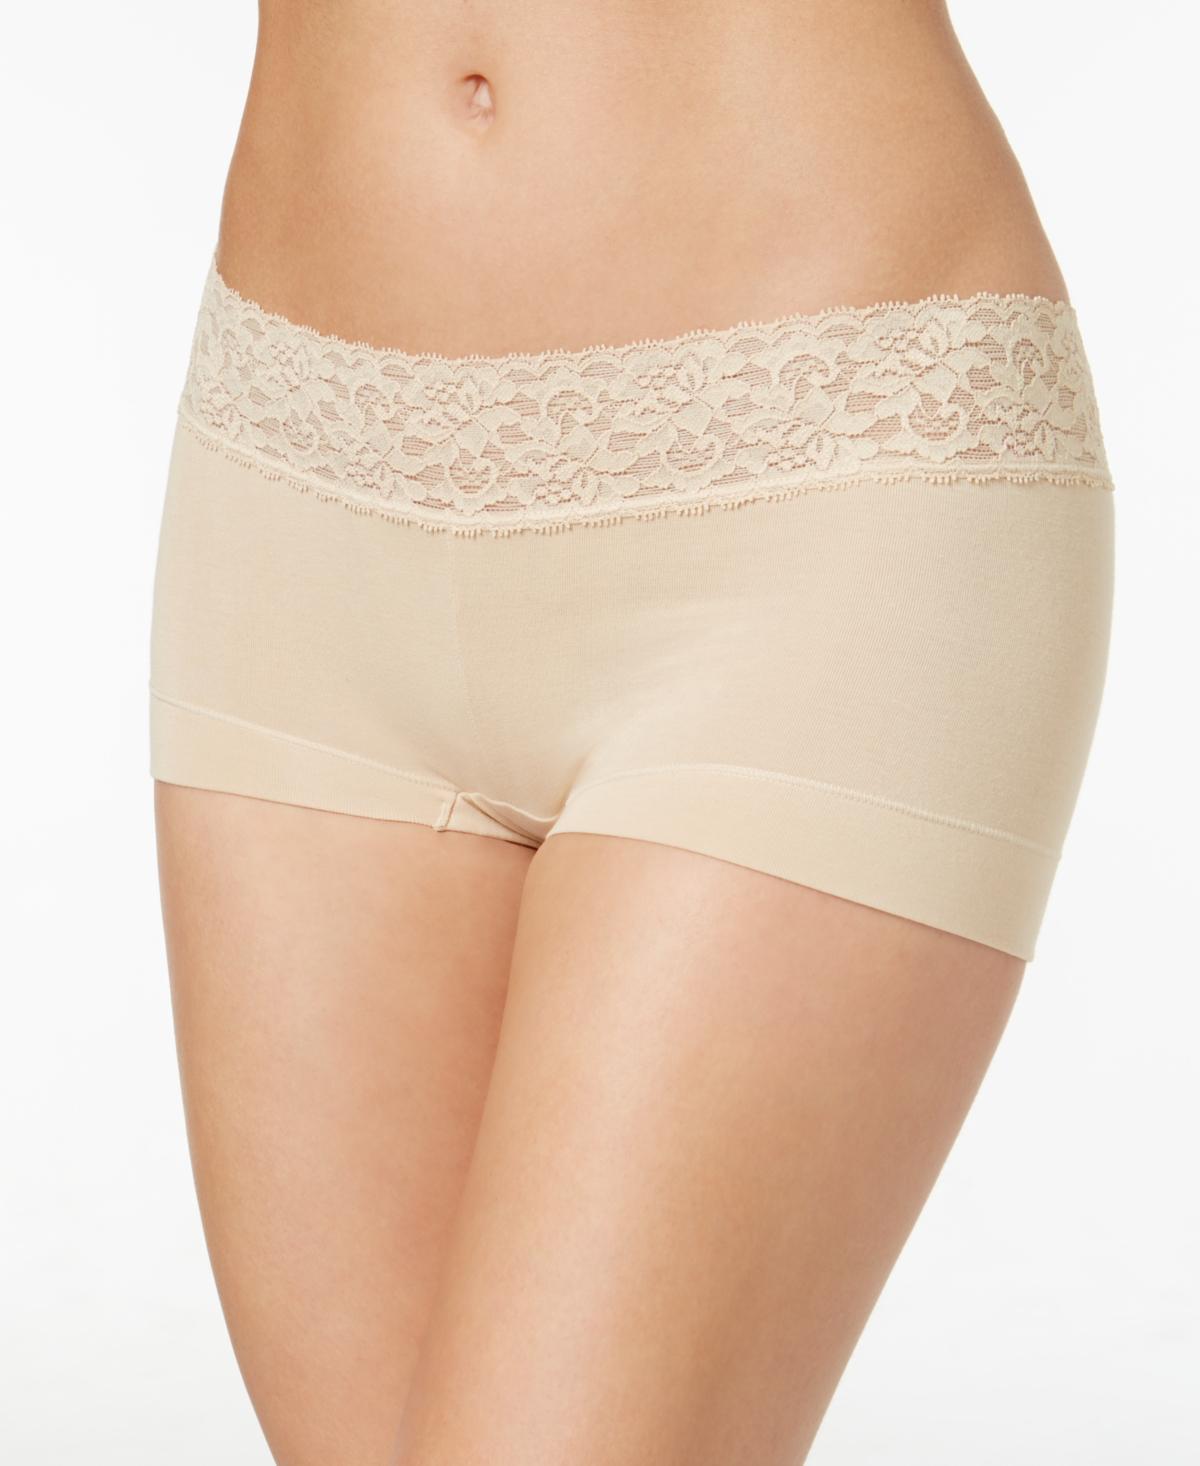 https://cdna.lystit.com/photos/macys/f49ec83b/maidenform-Latte-Lift-Nude-Cotton-Dream-Lace-Boyshort-Underwear-40859.jpeg